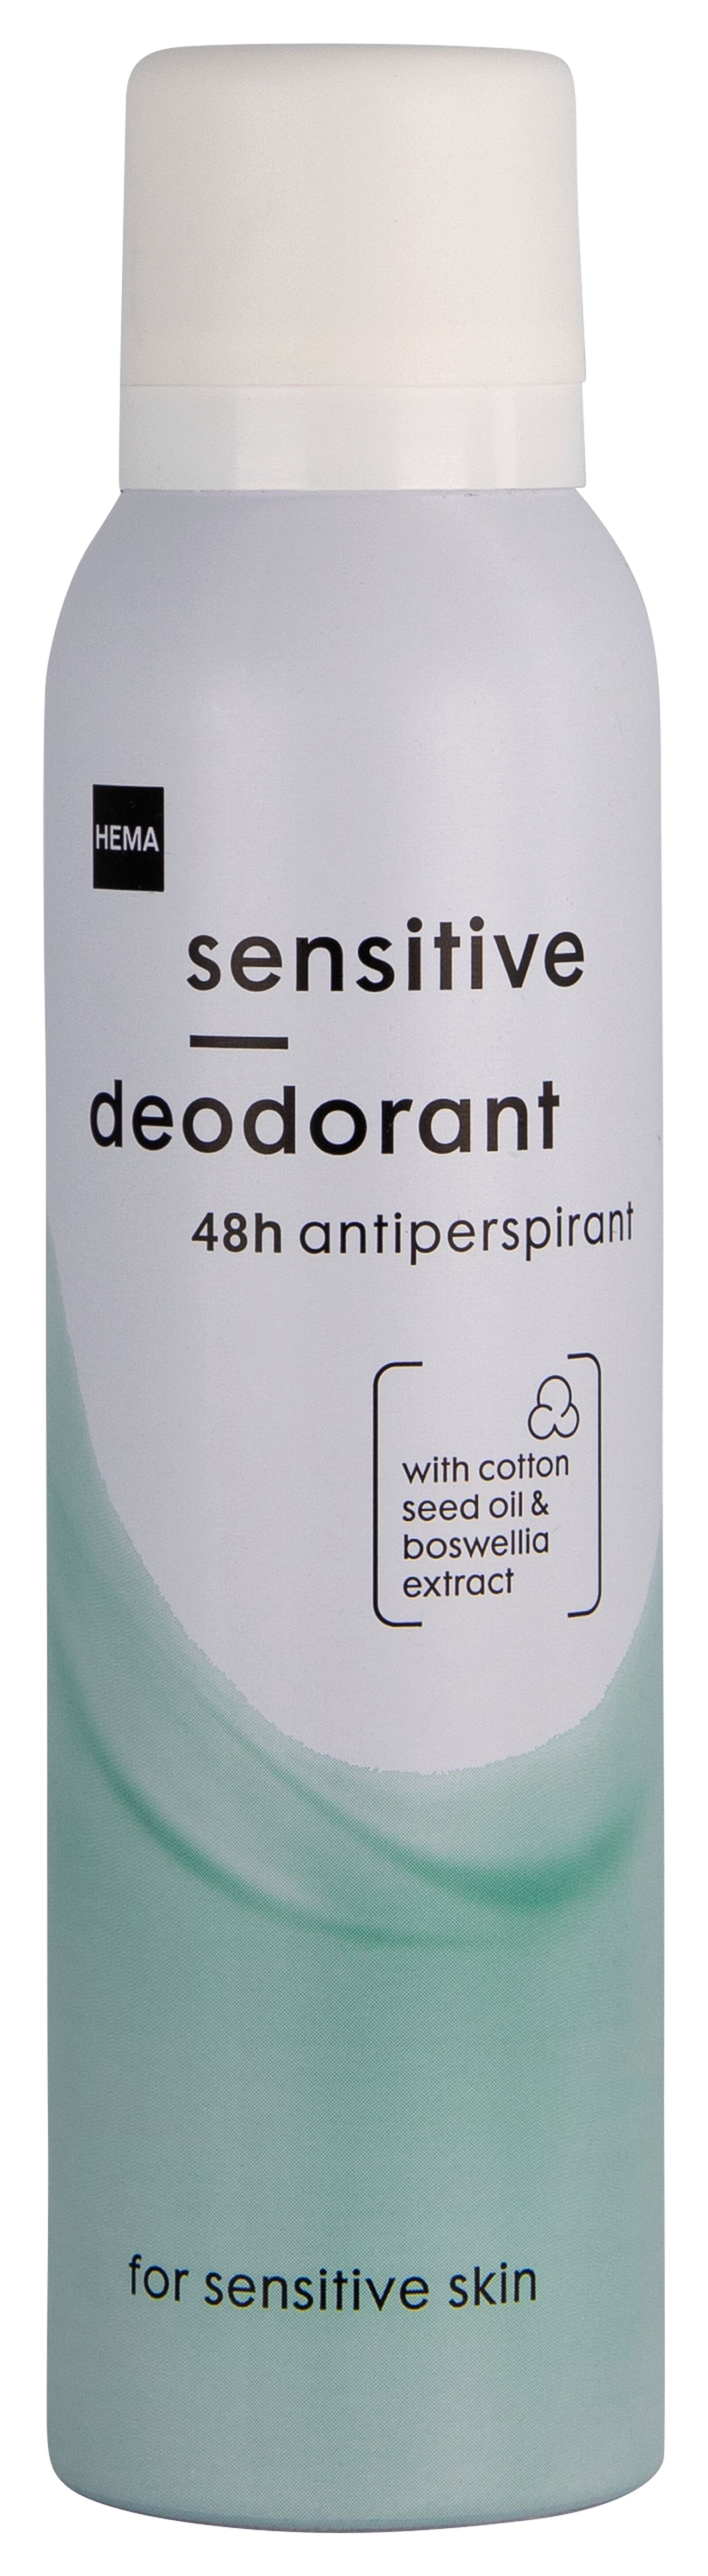 deodorant spray sensitive 150ml - 11310288 - HEMA